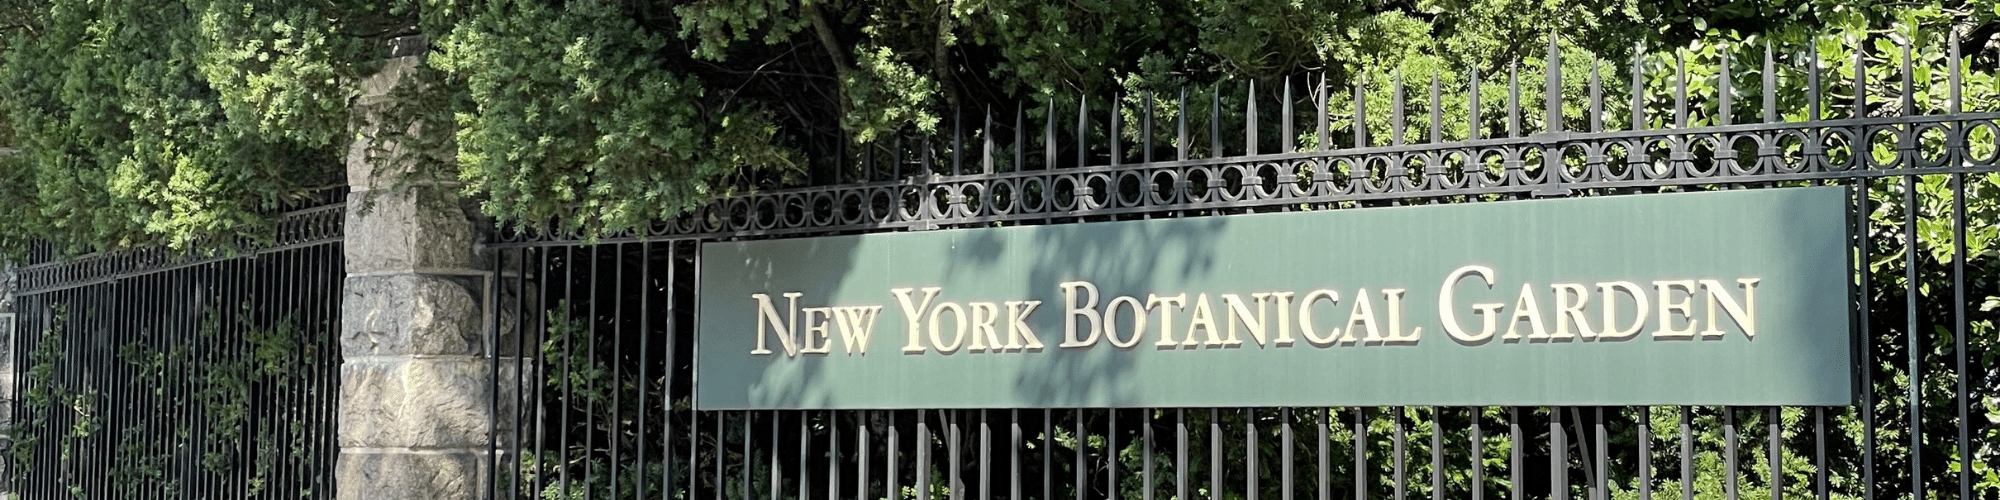 Jardín Botánico de Nueva York: todo lo que tenés que saber